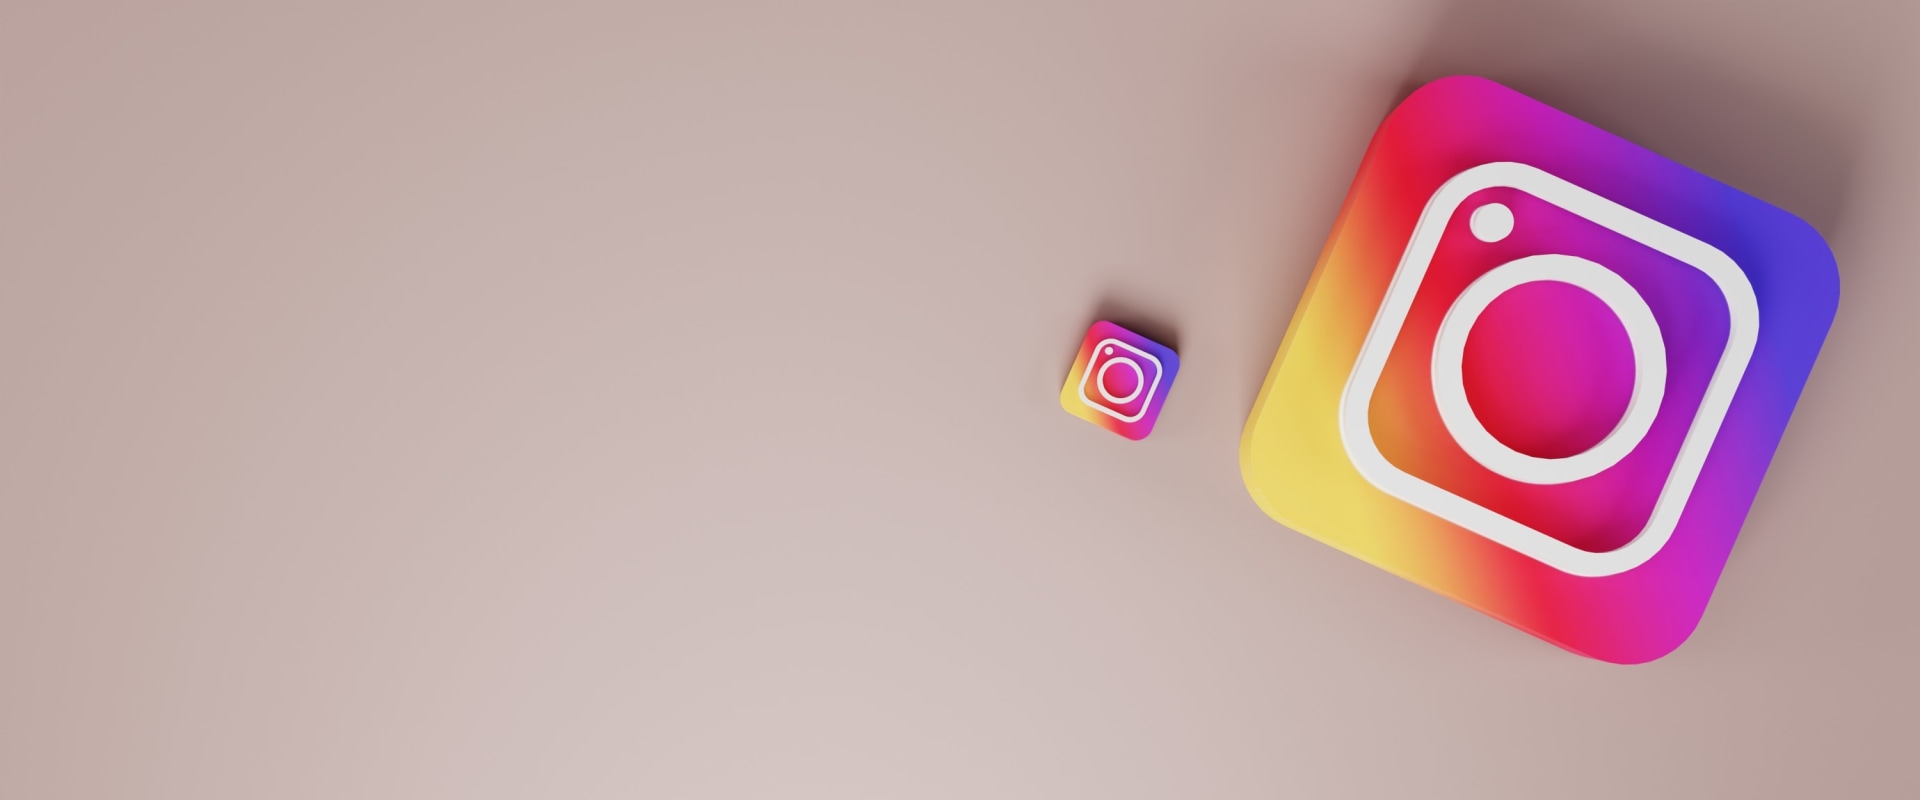 Maximizing Hashtags on Instagram Posts